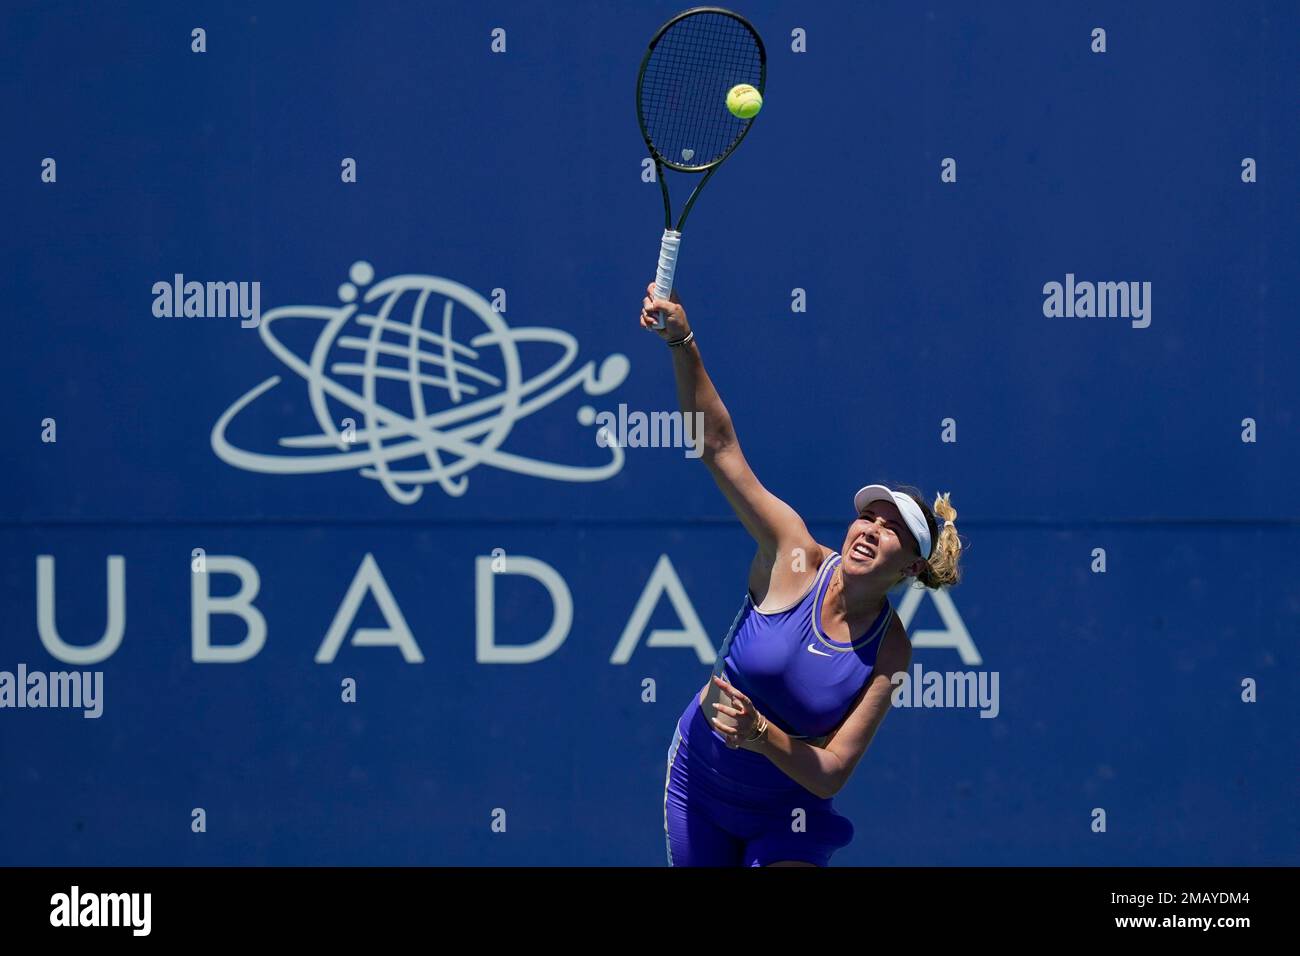 Amanda Anisimova, of the United States, serves during a match against Karolina Pliskova, of the Czech Republic, at the Mubadala Silicon Valley Classic tennis tournament in San Jose, Calif., Wednesday, Aug